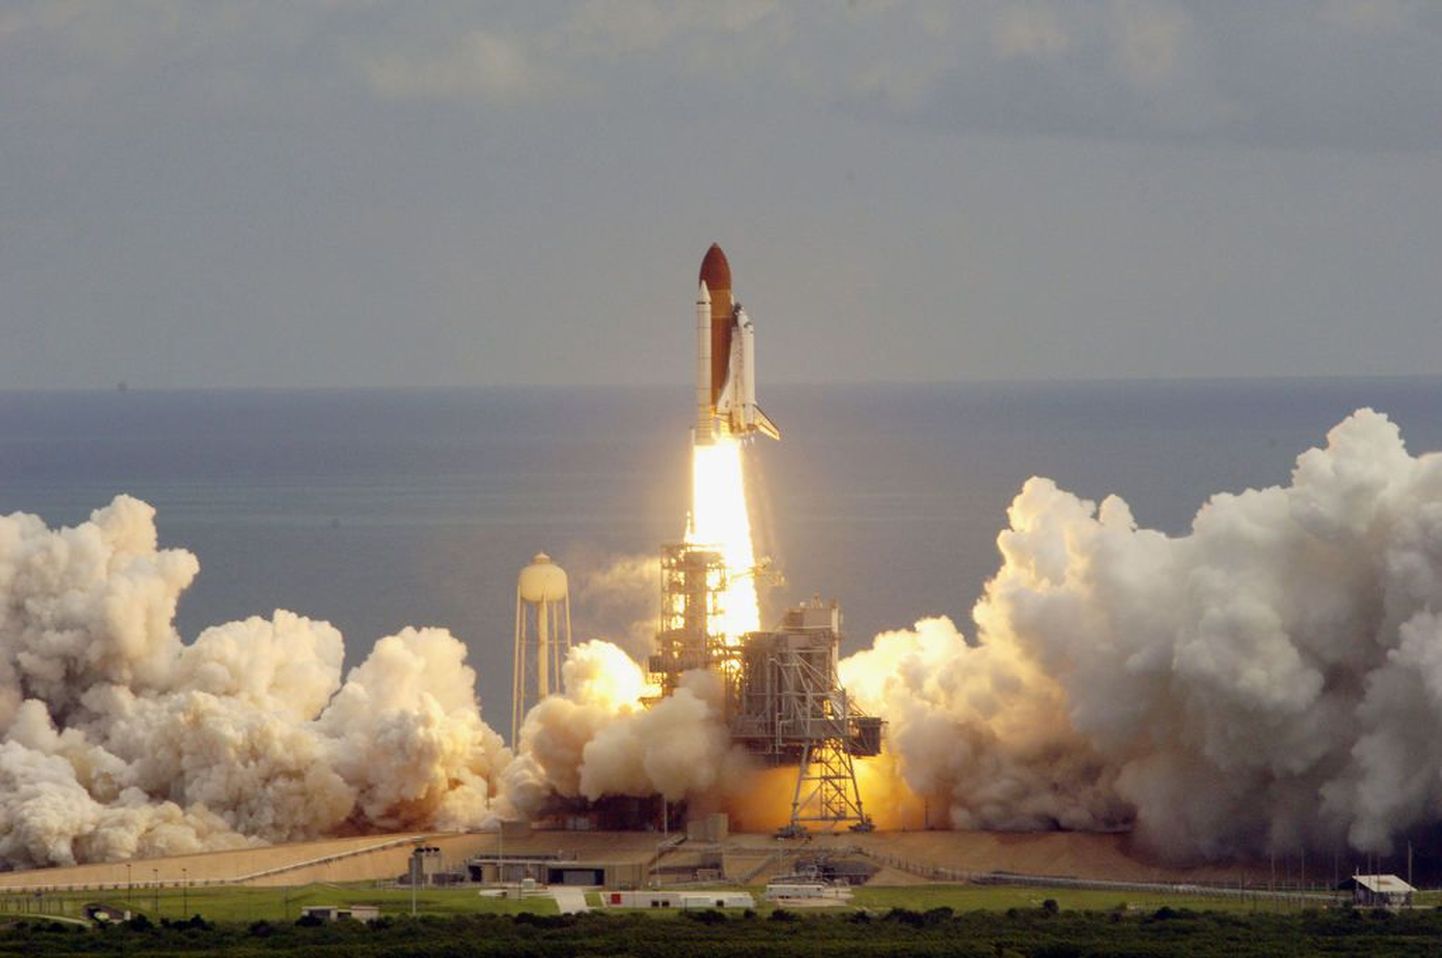 USA kosmosesüstik Discovery start Kennedy kosmosekeskusest Floridas.